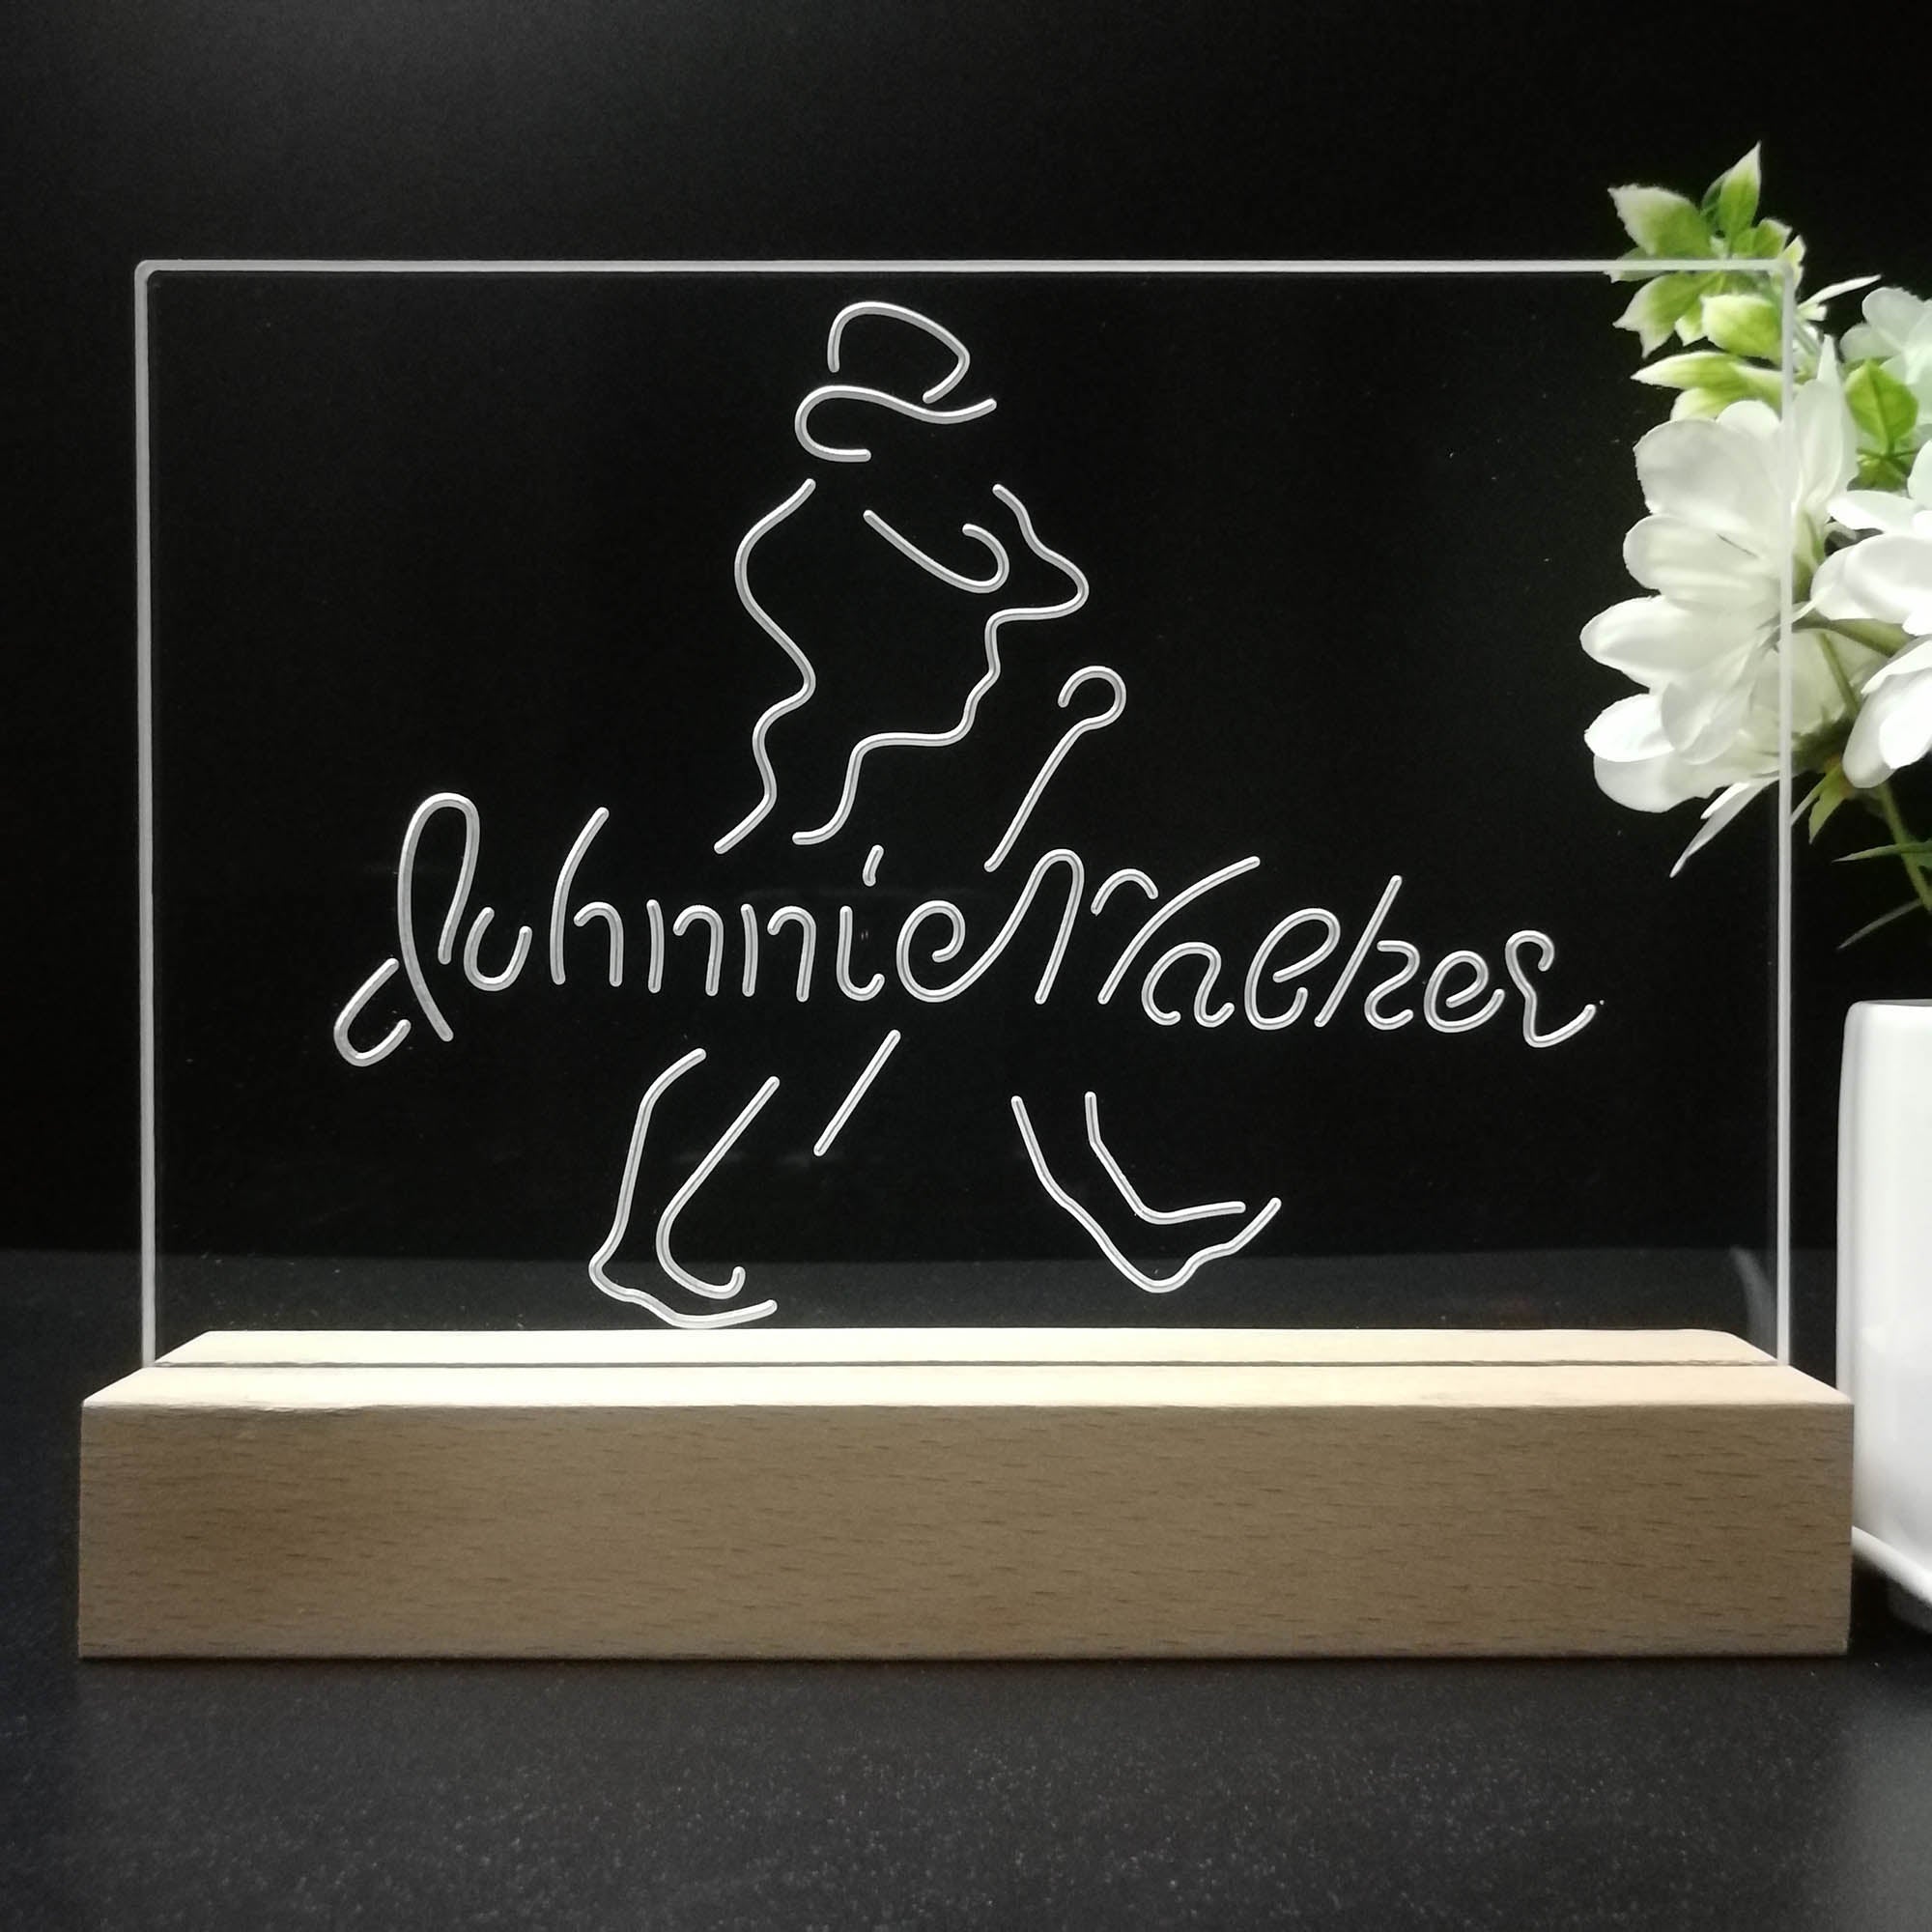 Johnnie Walker Line Logo Right Neon Sign Pub Bar Decor Lamp